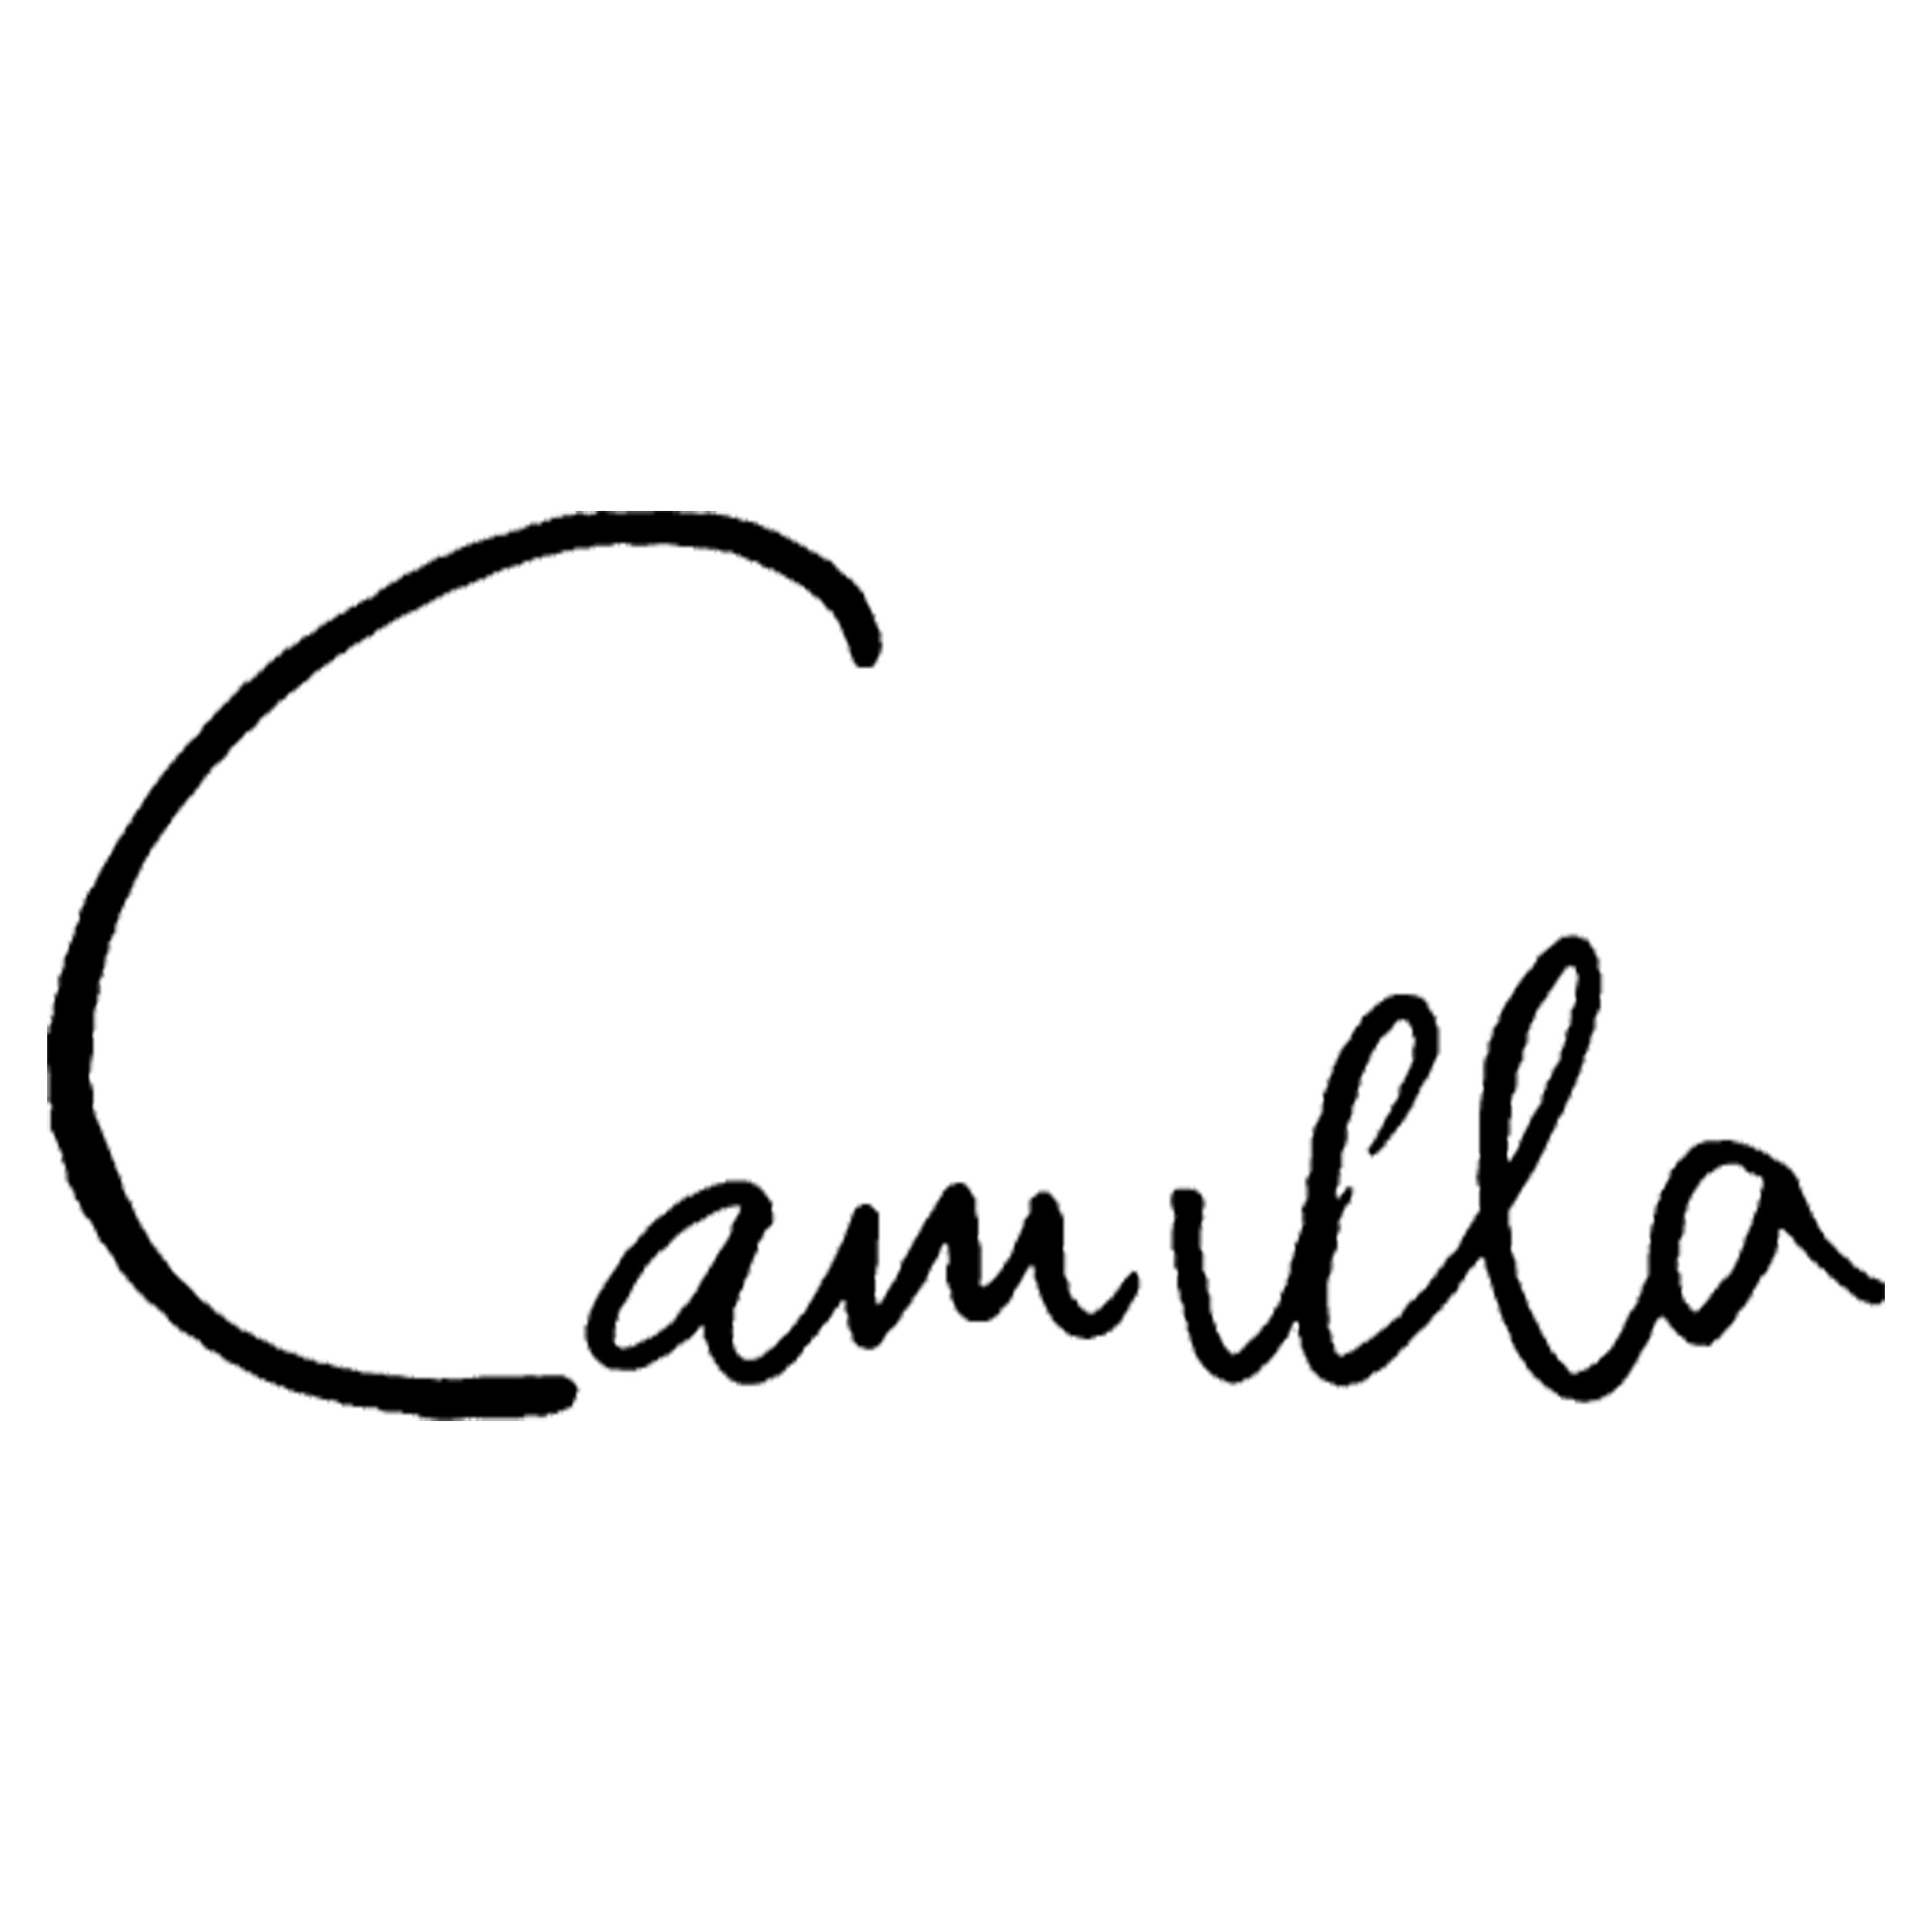 Camilla Logo square.jpg